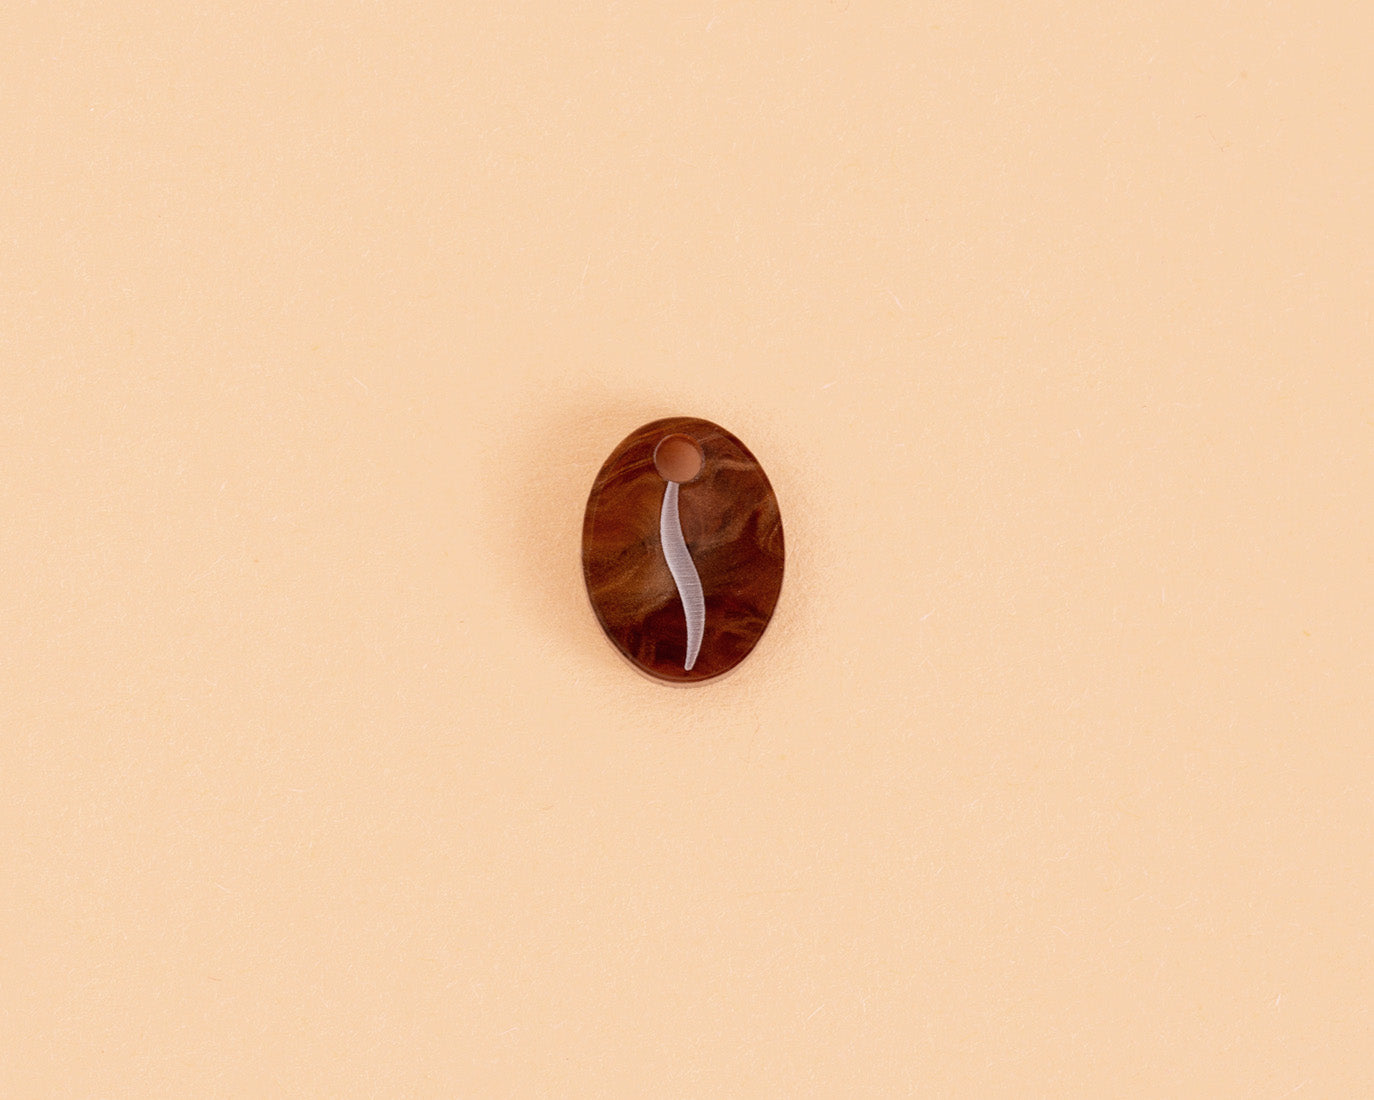 Single coffee bean pendant